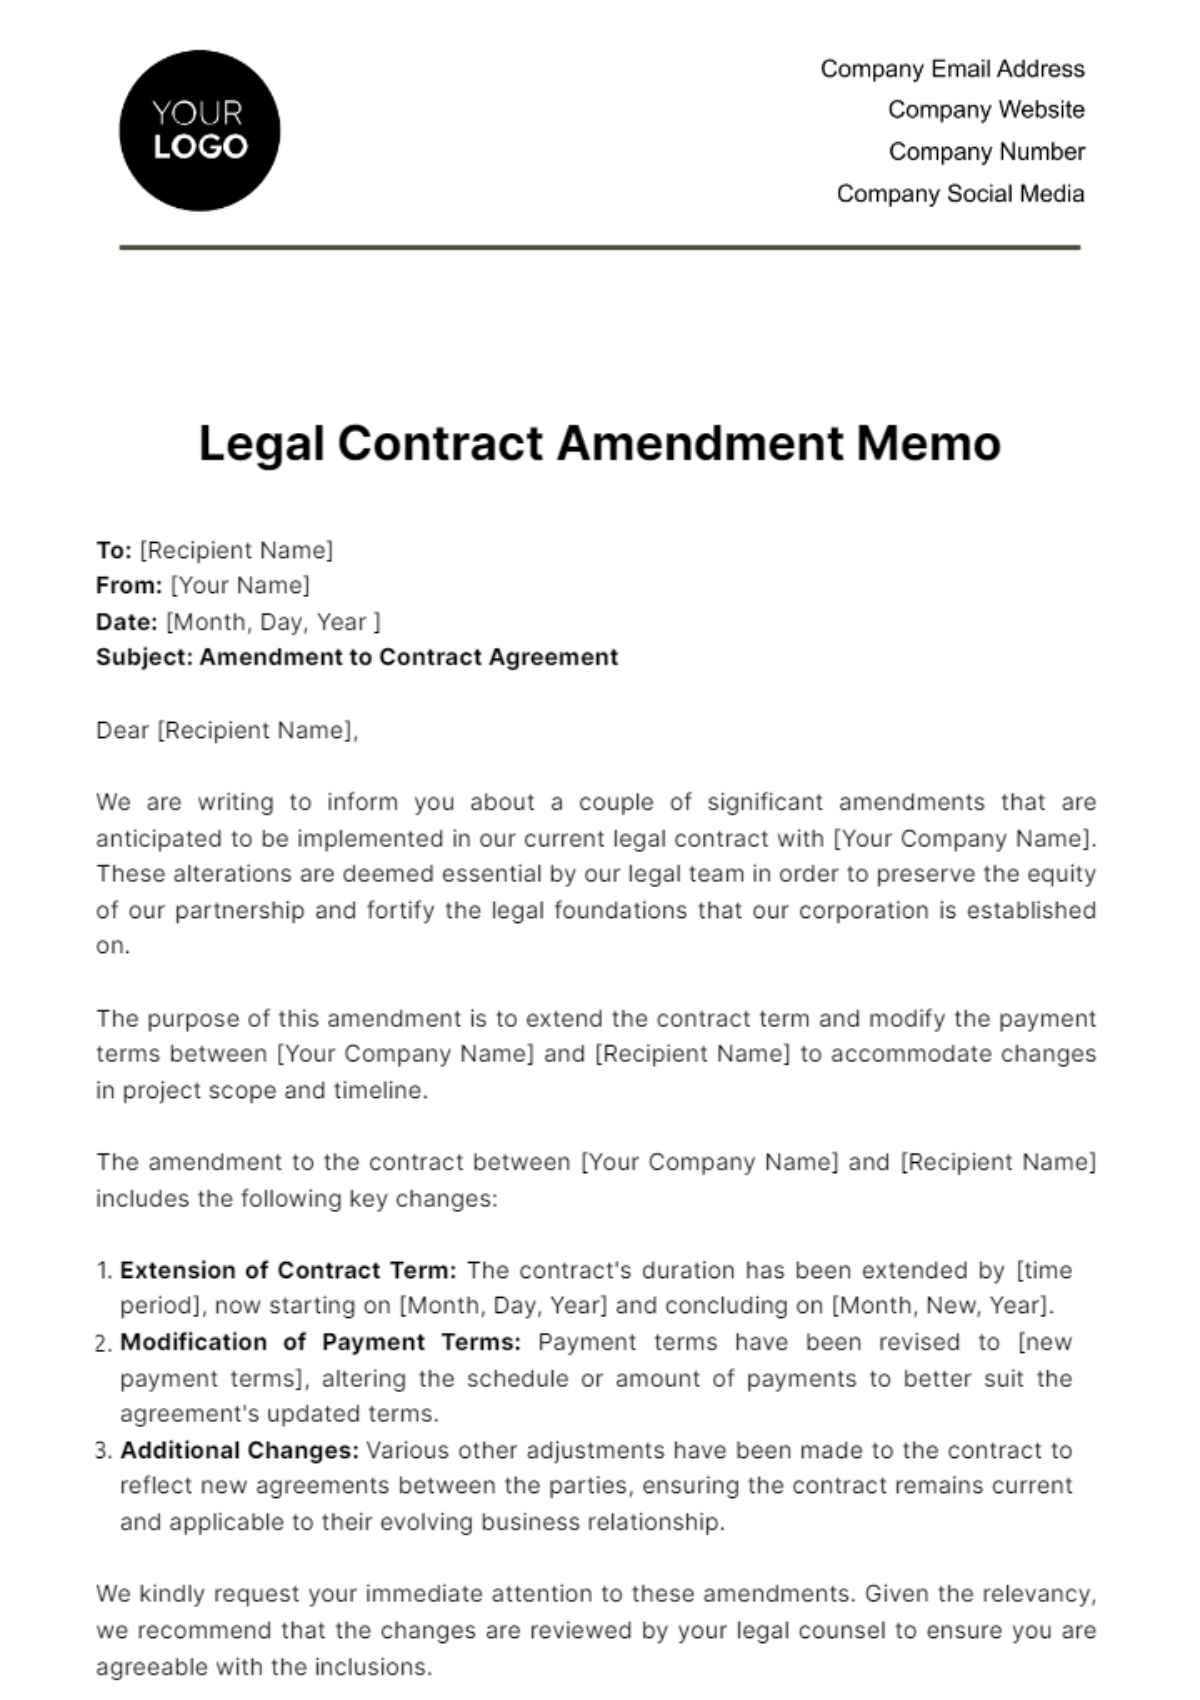 Free Legal Contract Amendment Memo Template